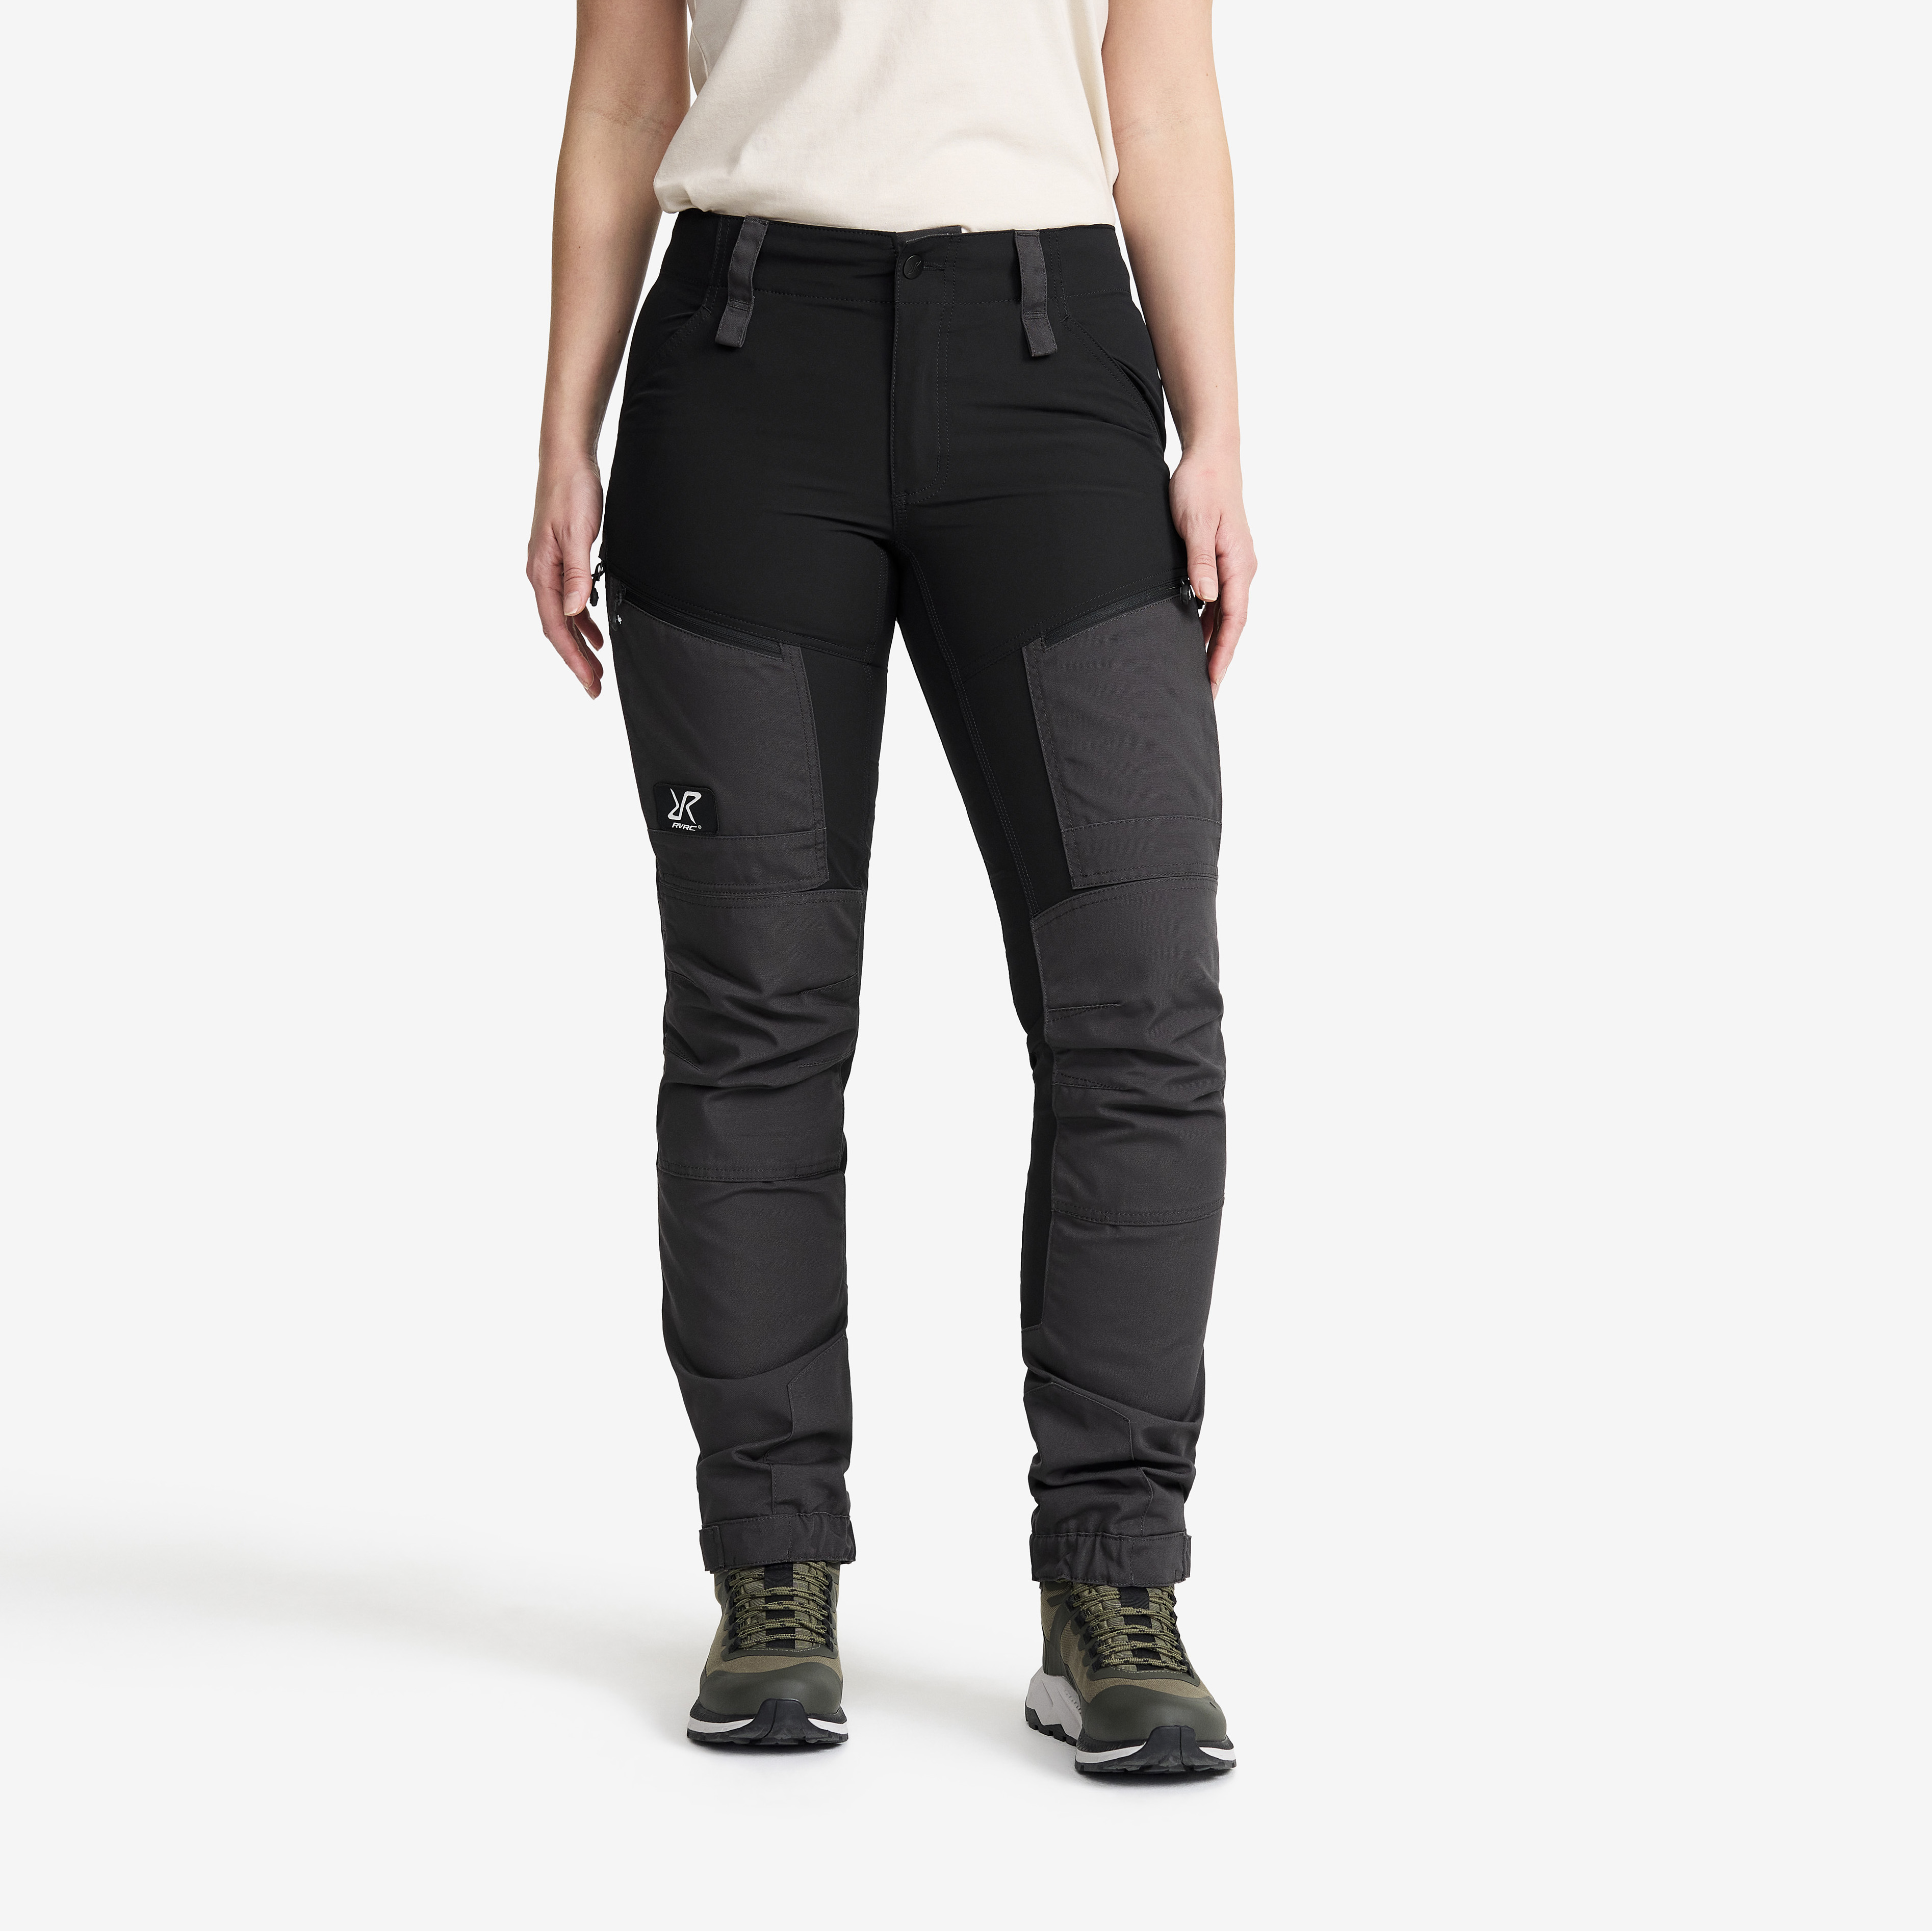 RVRC GP Pro hiking trousers for women in black